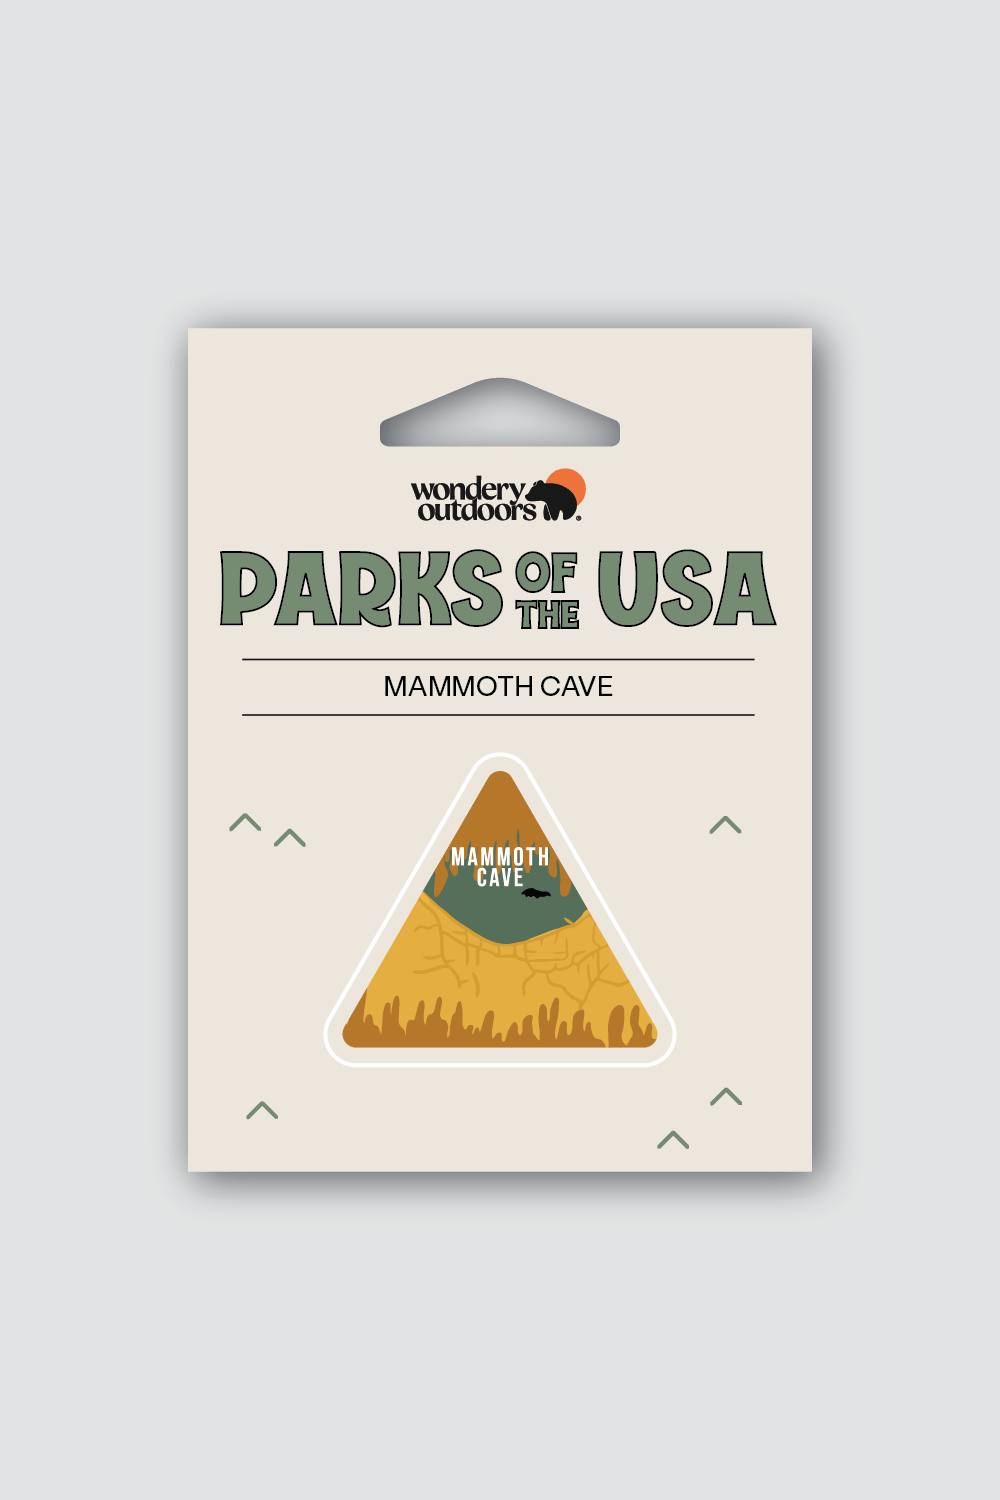 #national park_mammoth cave _USA National Parks souvenir sticker gift sets